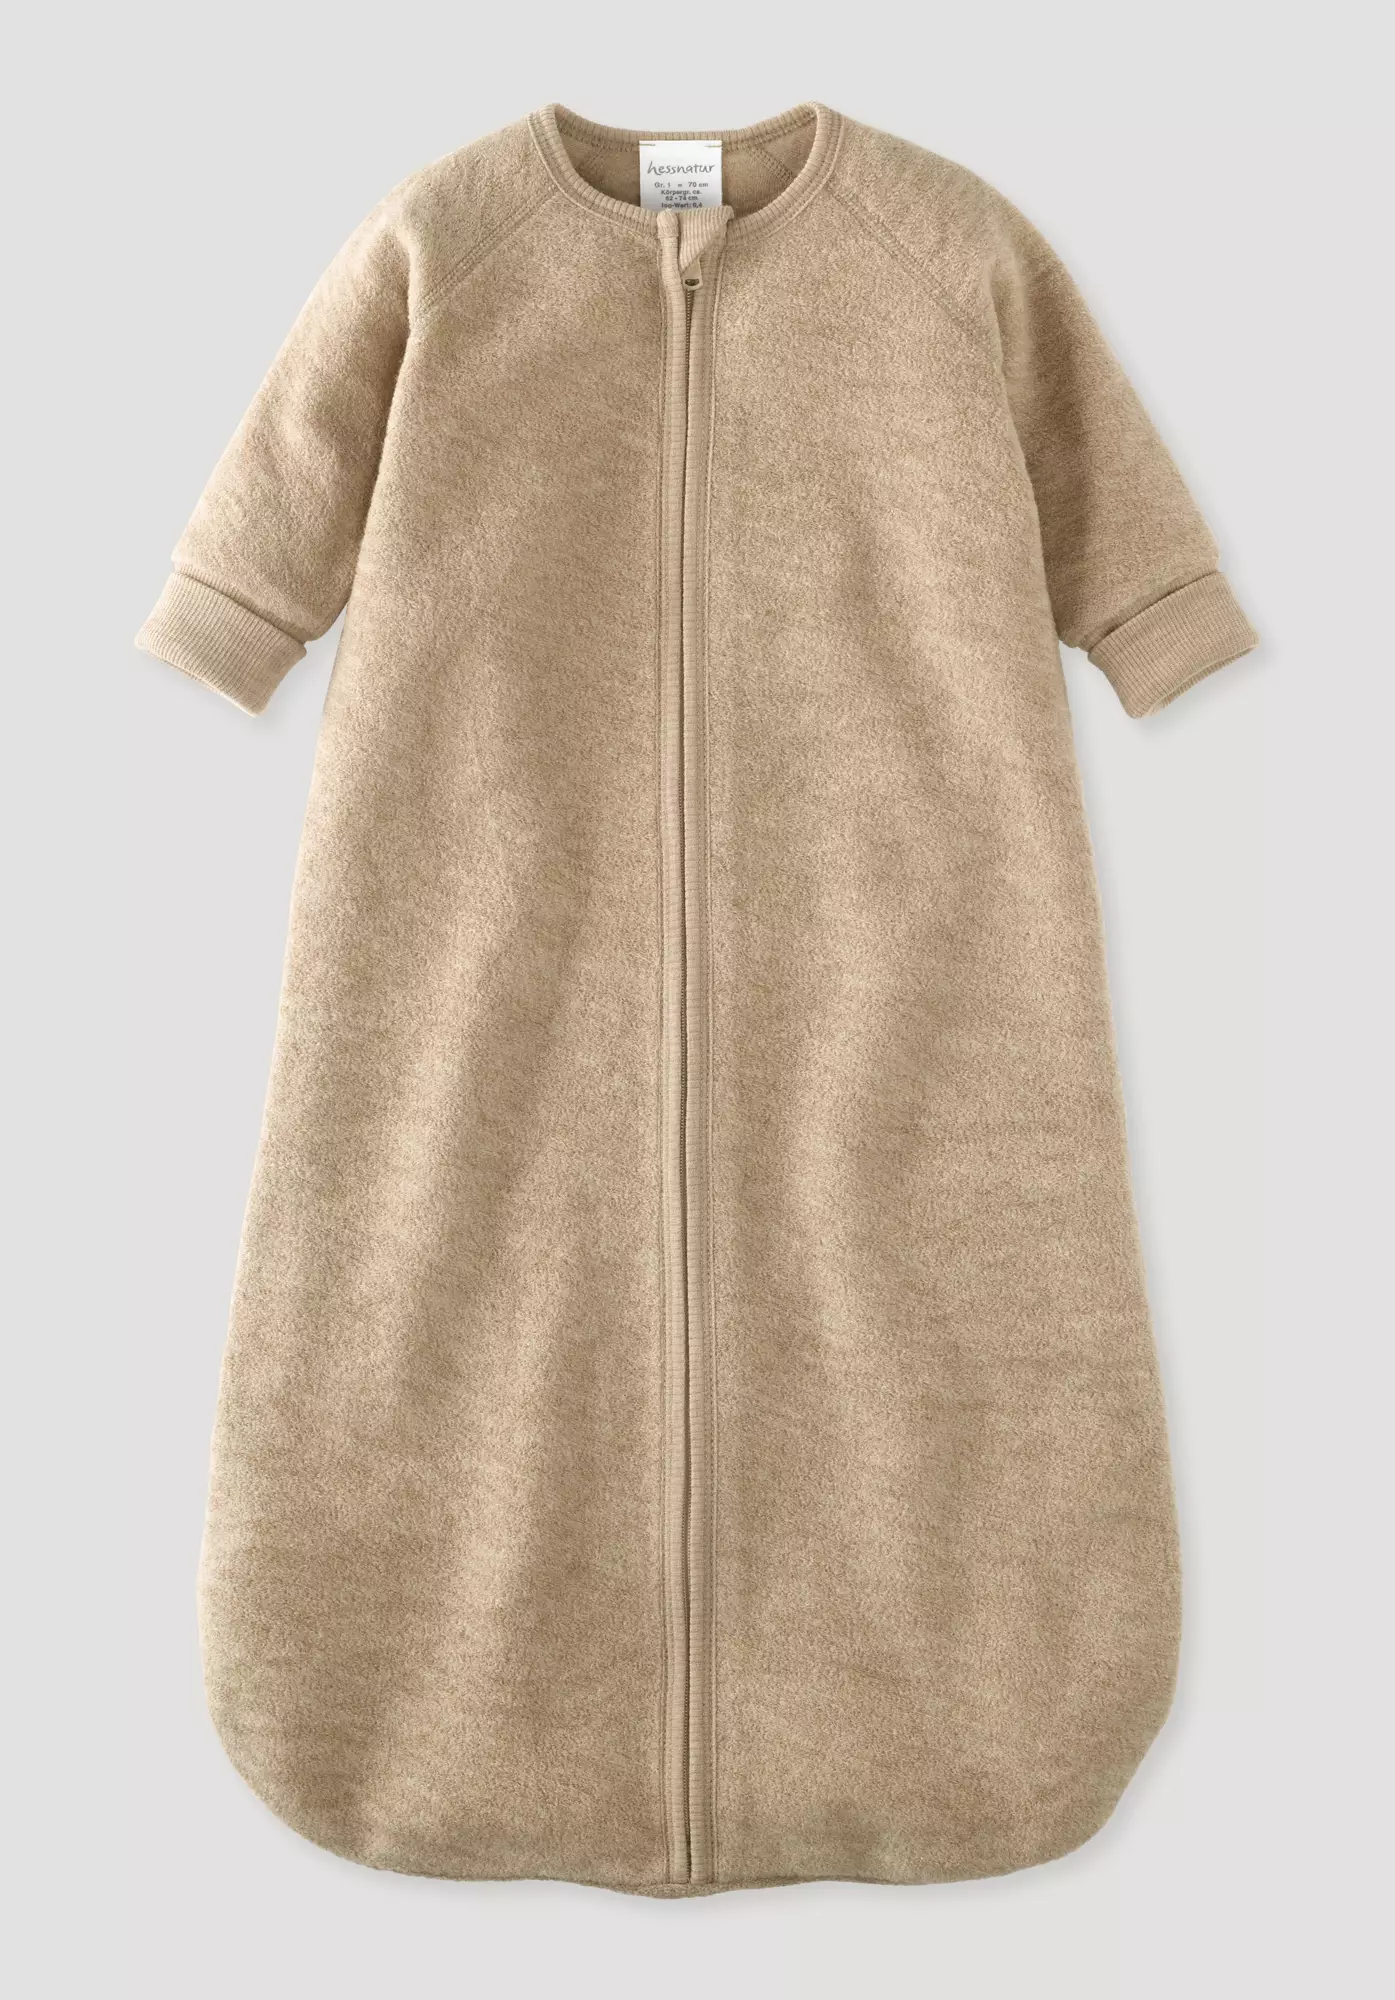 Wool terry sleeping bag made from pure organic merino wool - 0